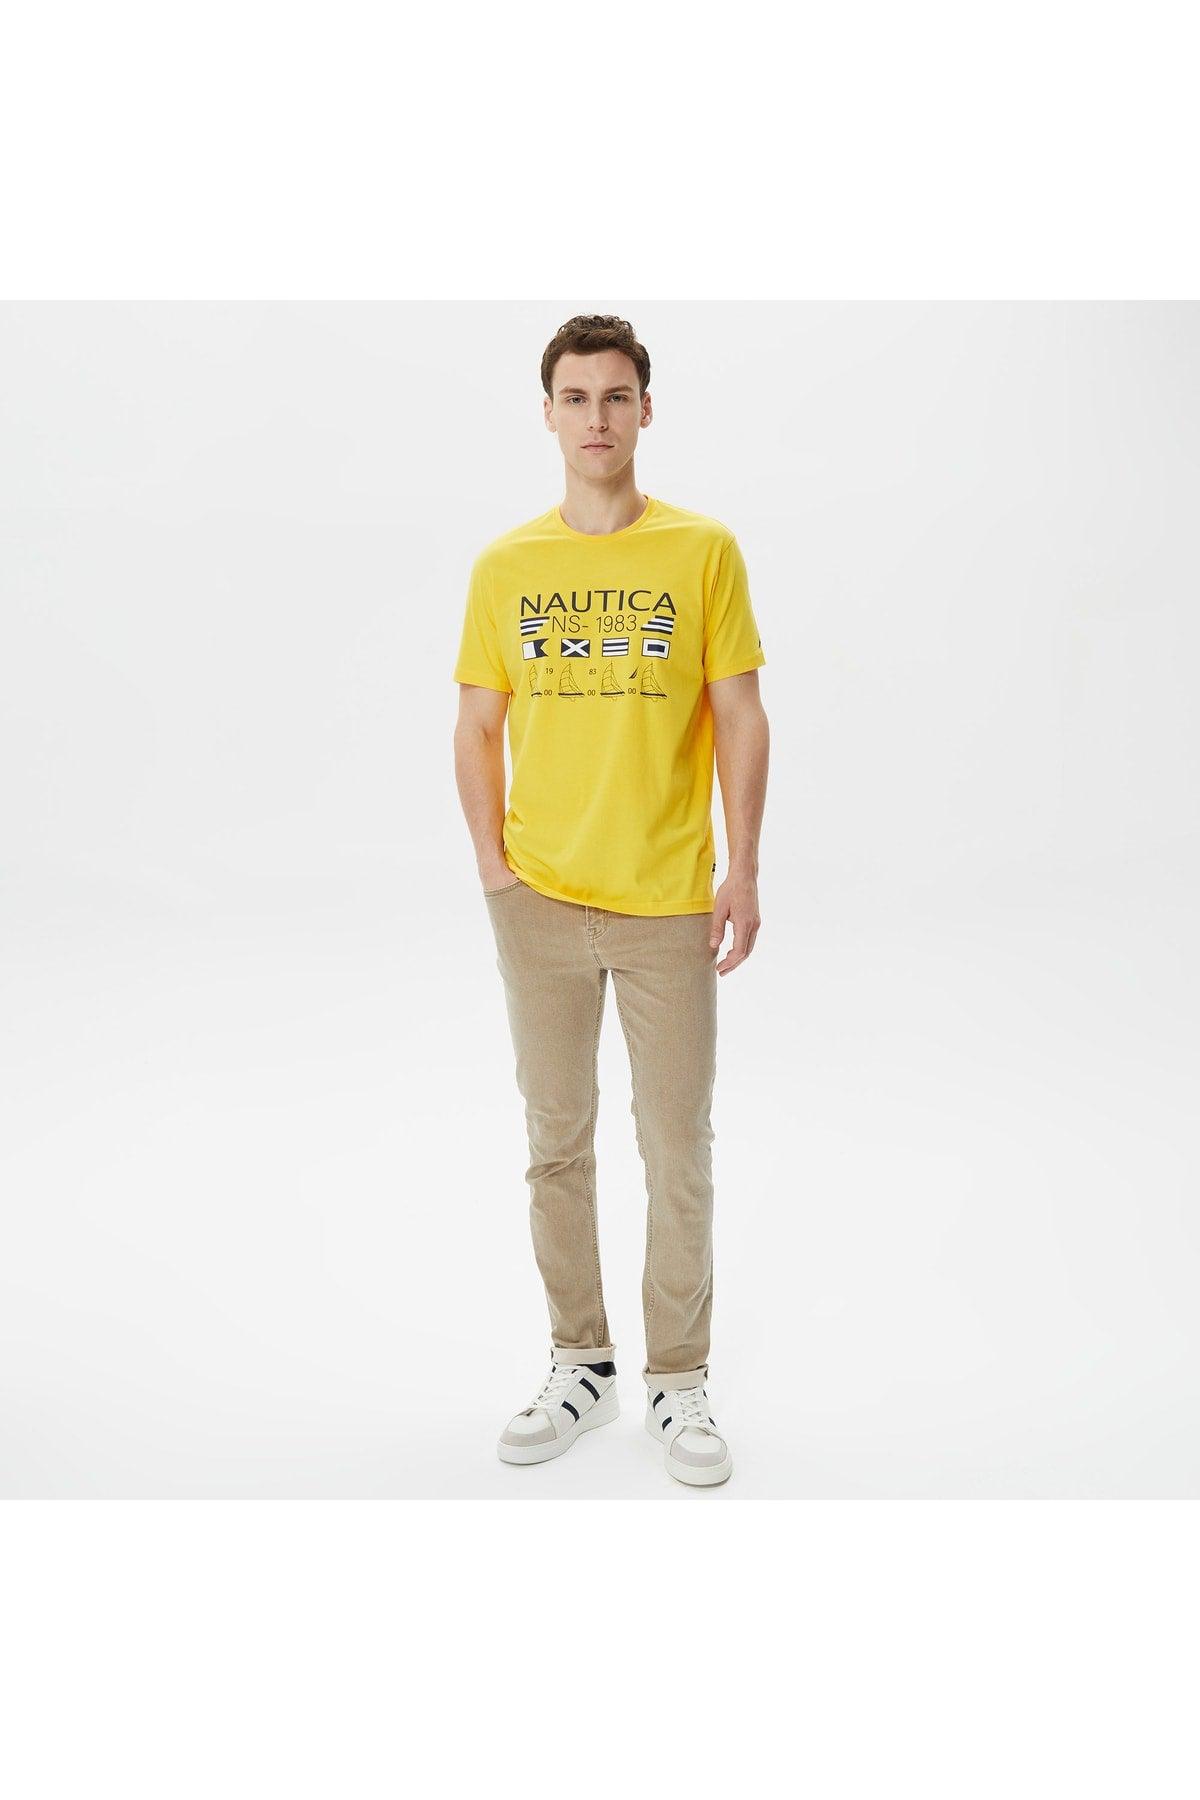 Men's Yellow Printed Standard Fit Short Sleeve T-shirt - Swordslife